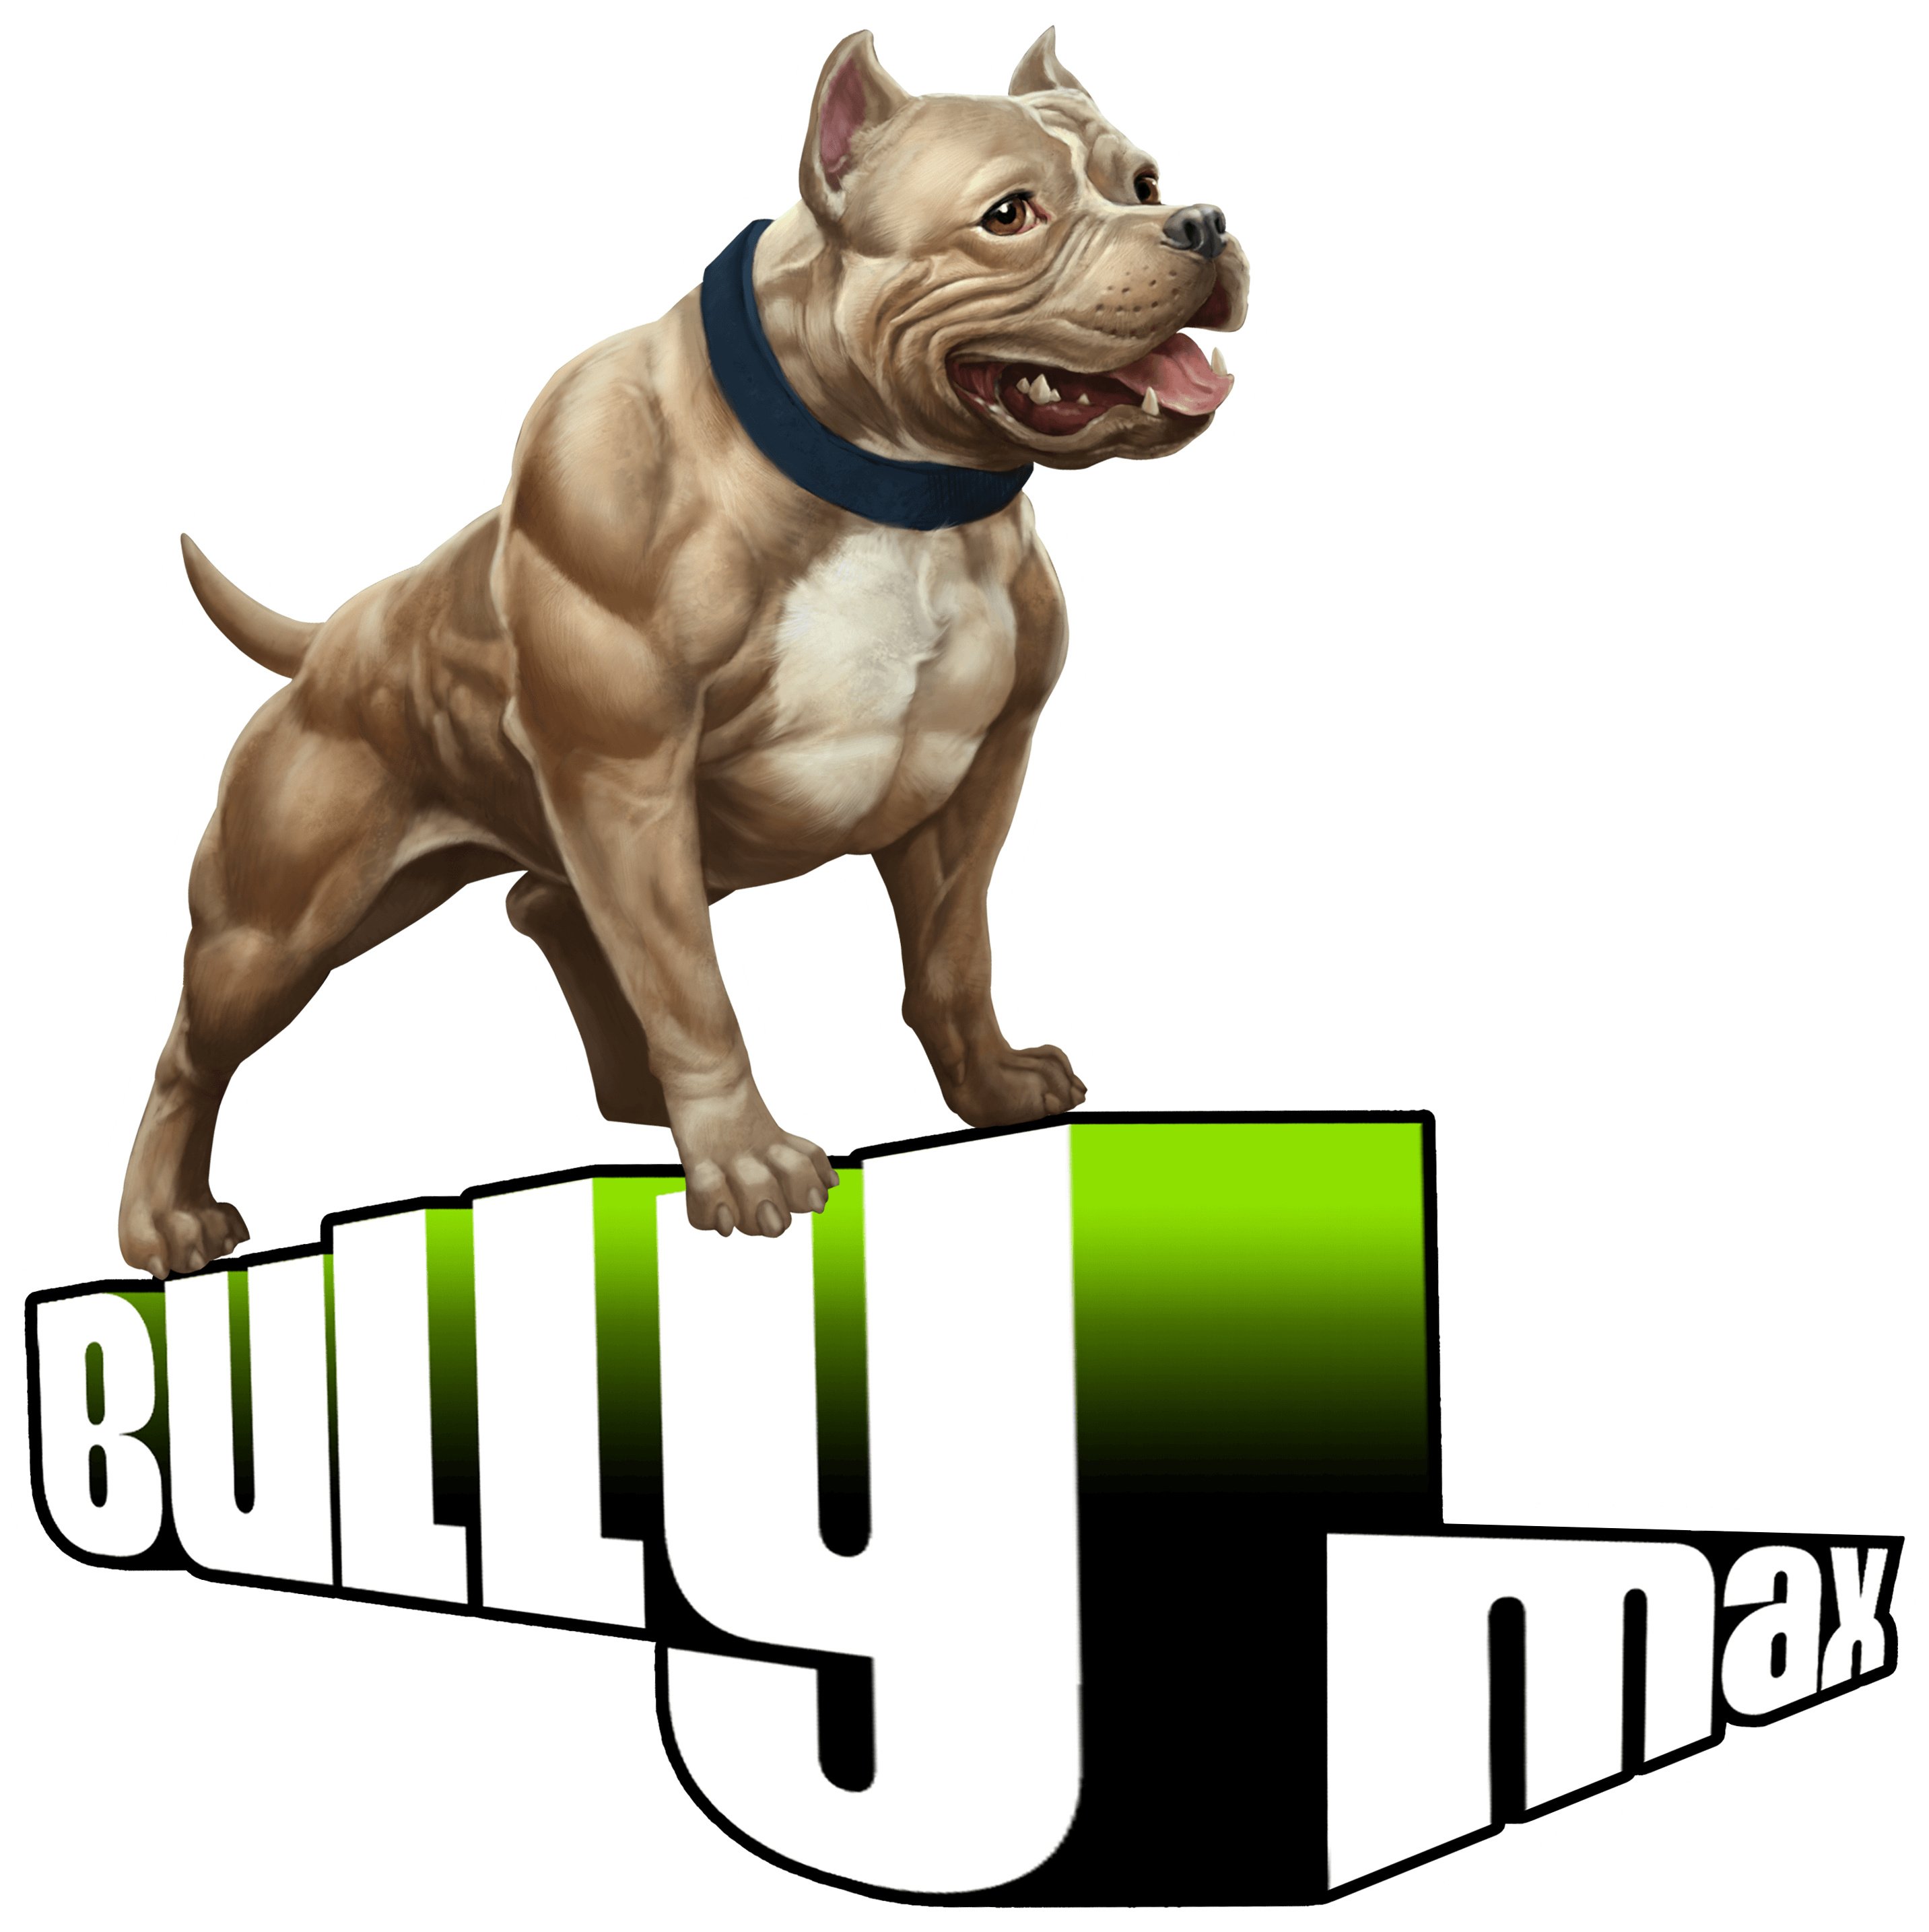 Bully logotipo PNG imagem fundo